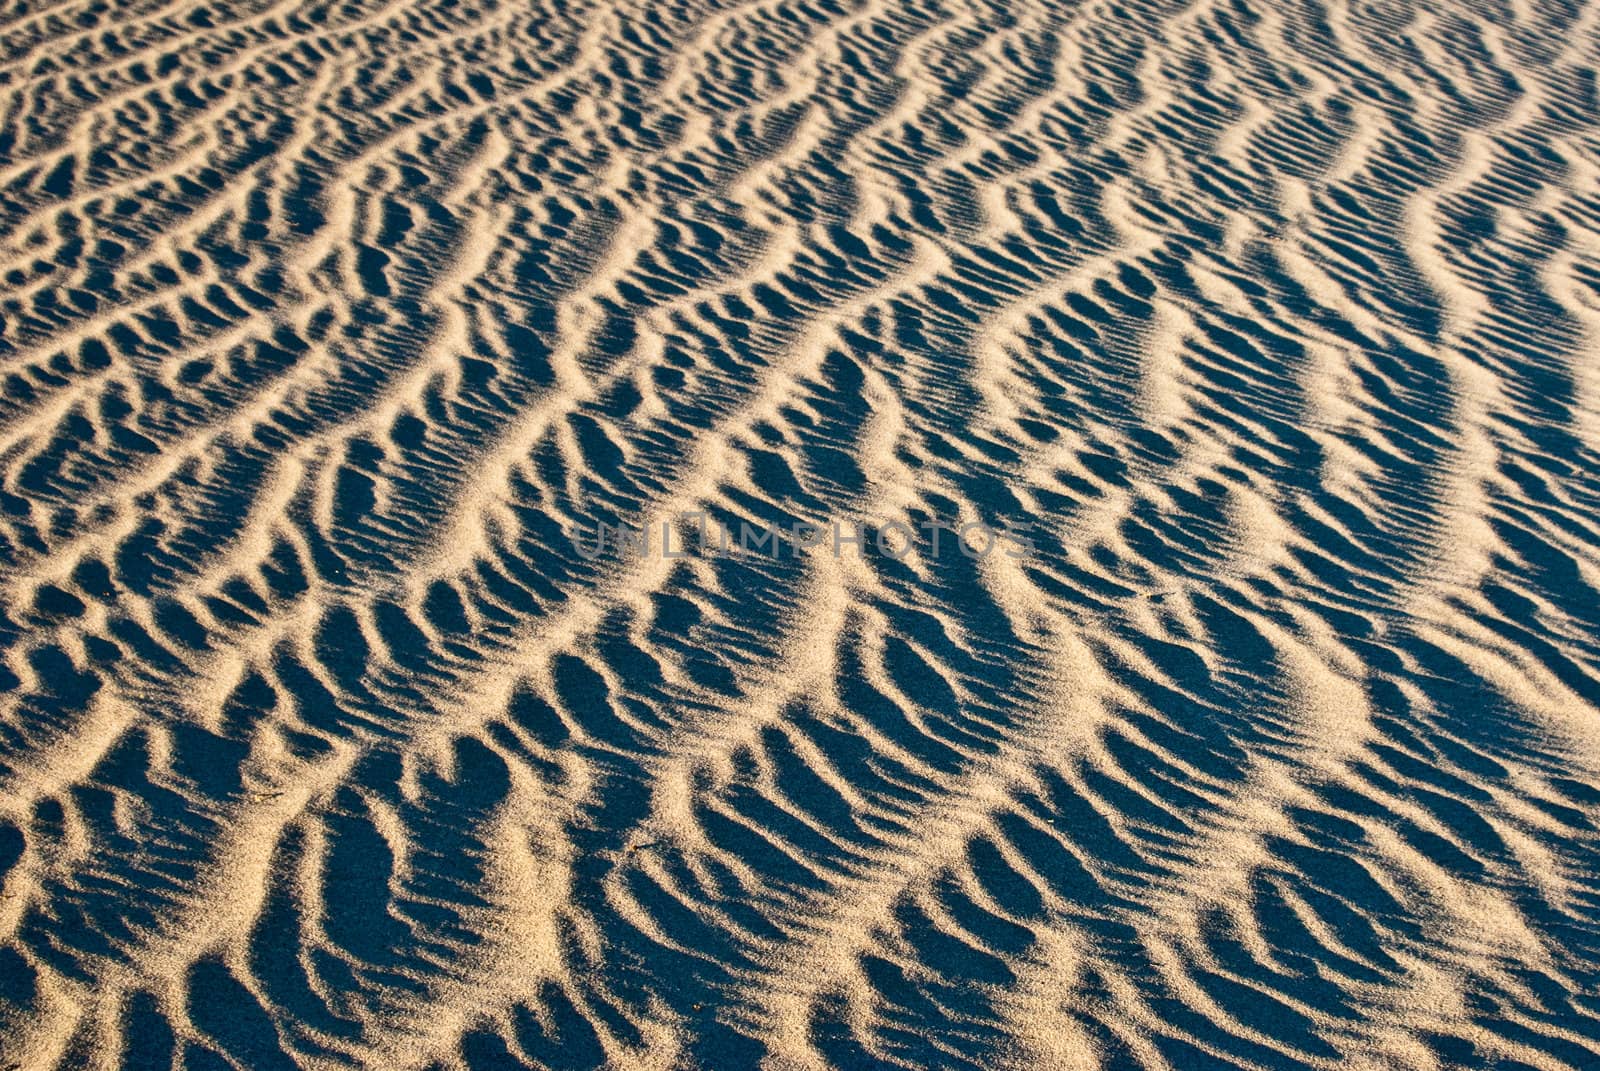 Desert  creates sand ridges at Death Valley